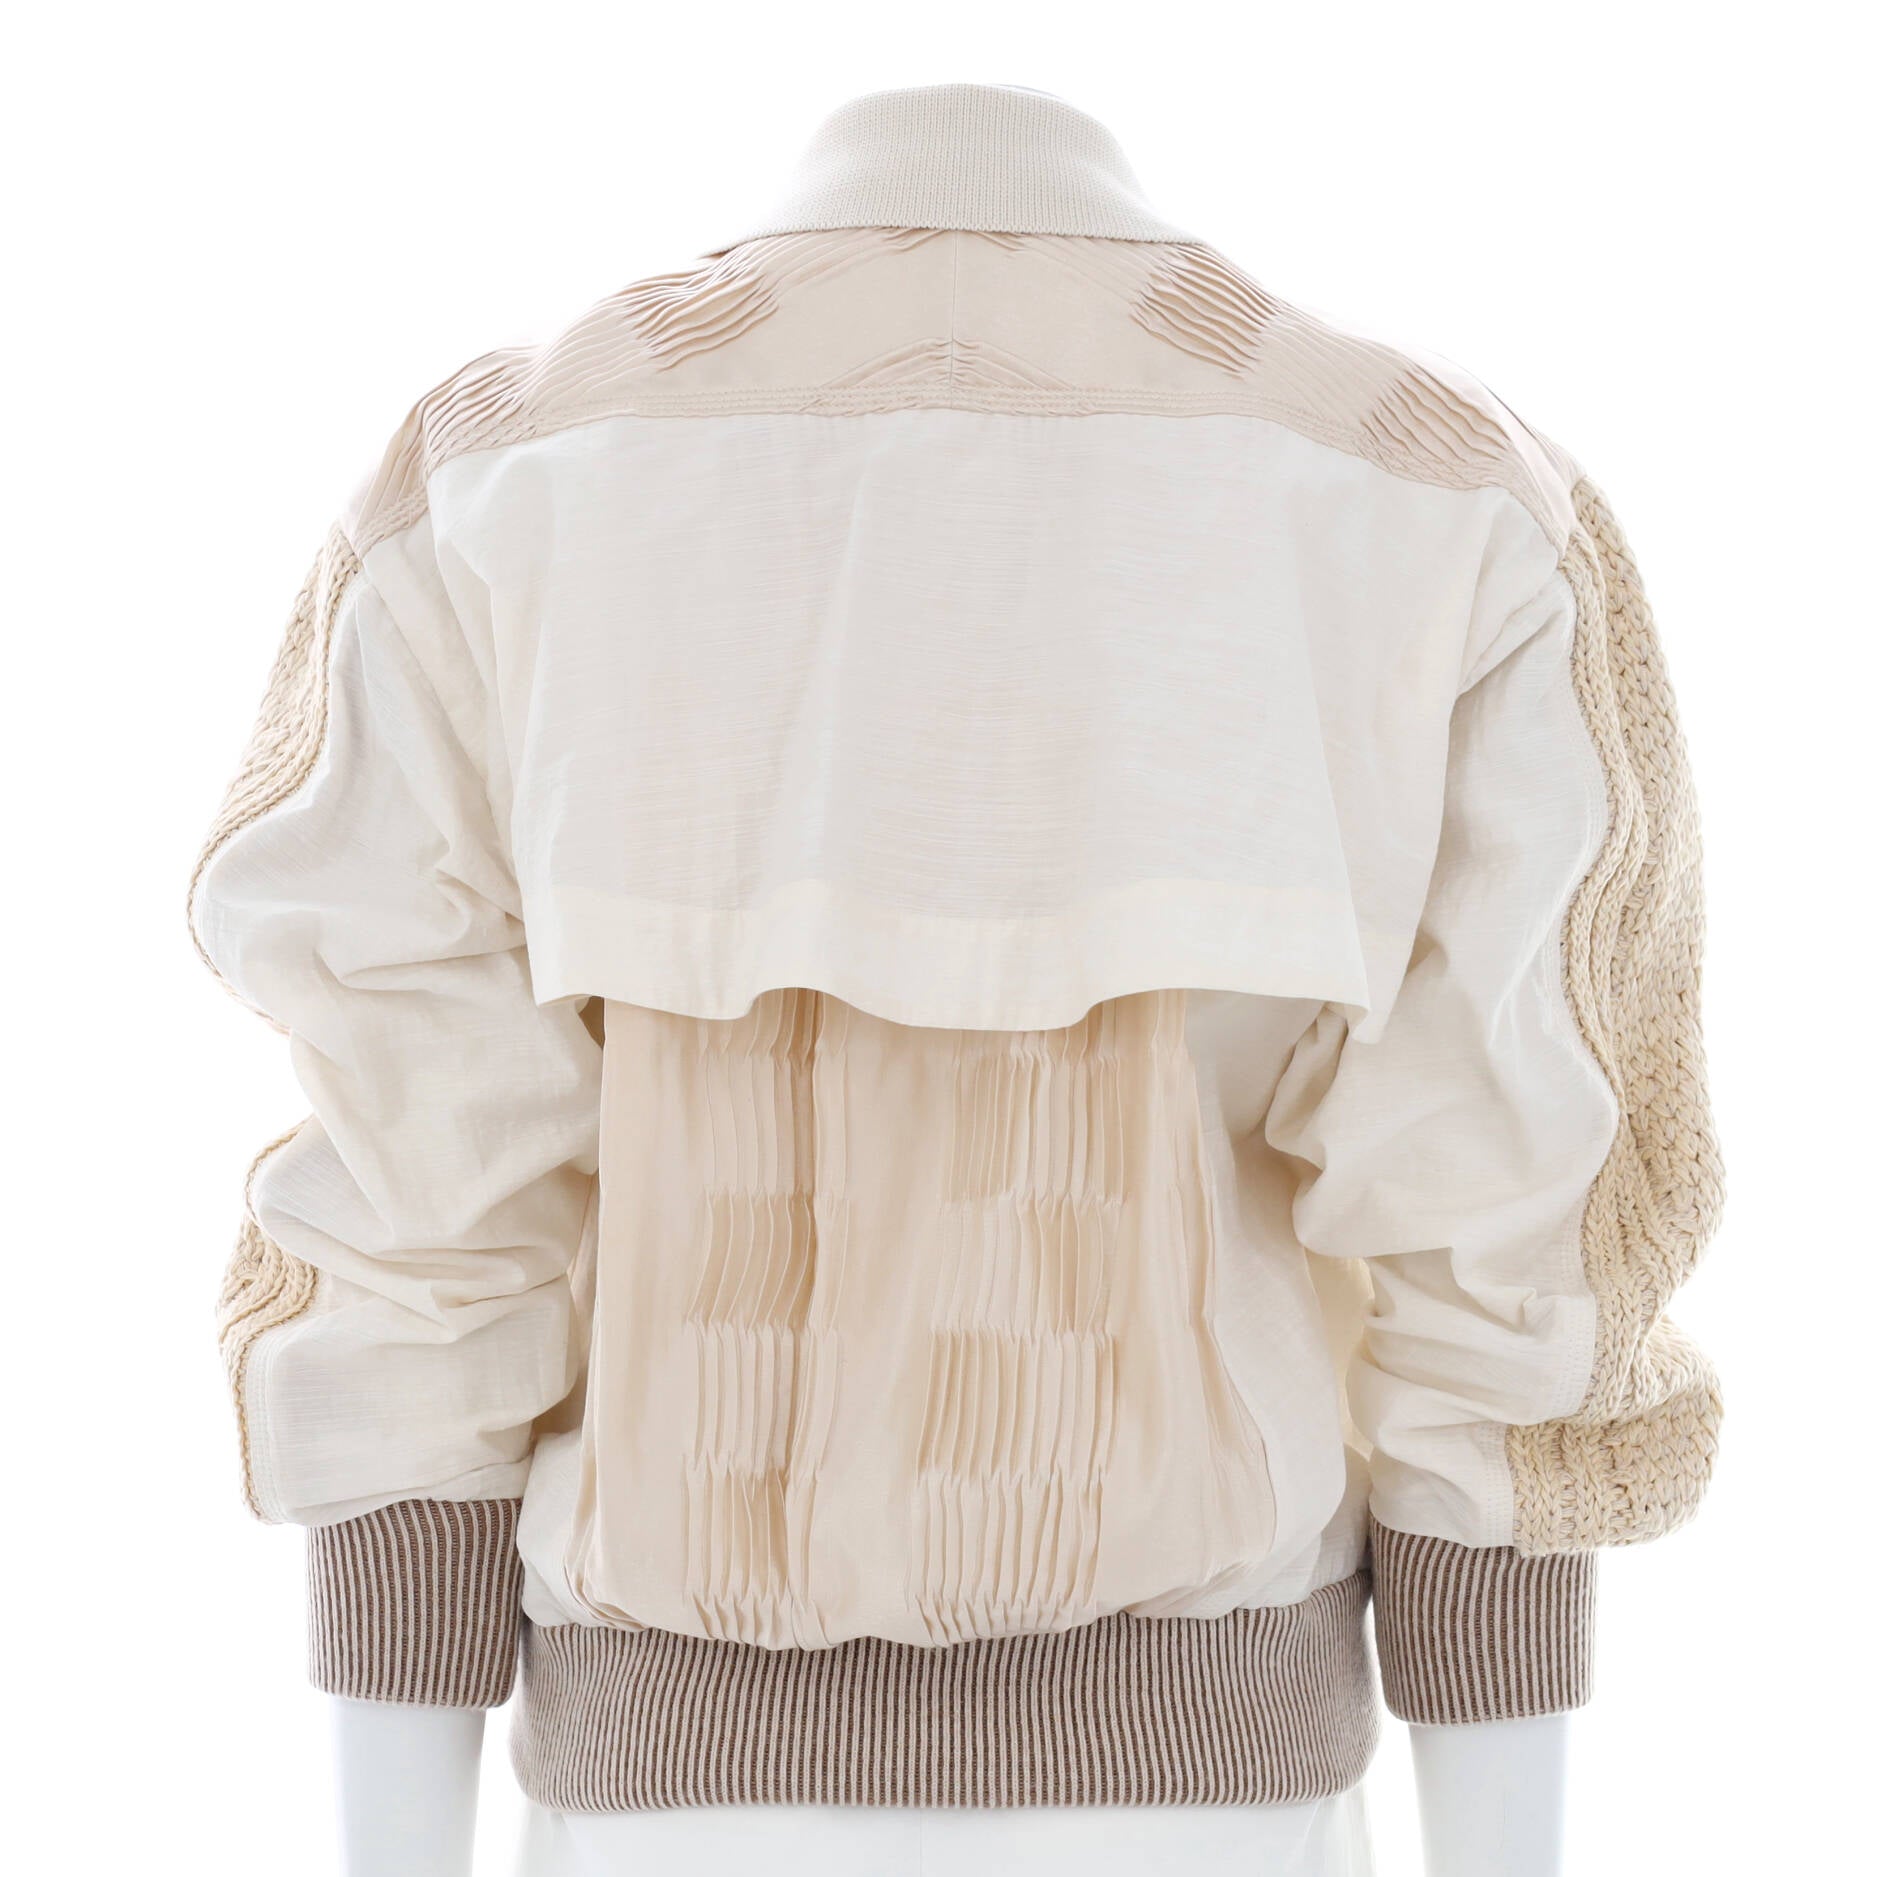 Louis Vuitton Sleeveless Monogram Jacquard Hooded Jacket Size 36